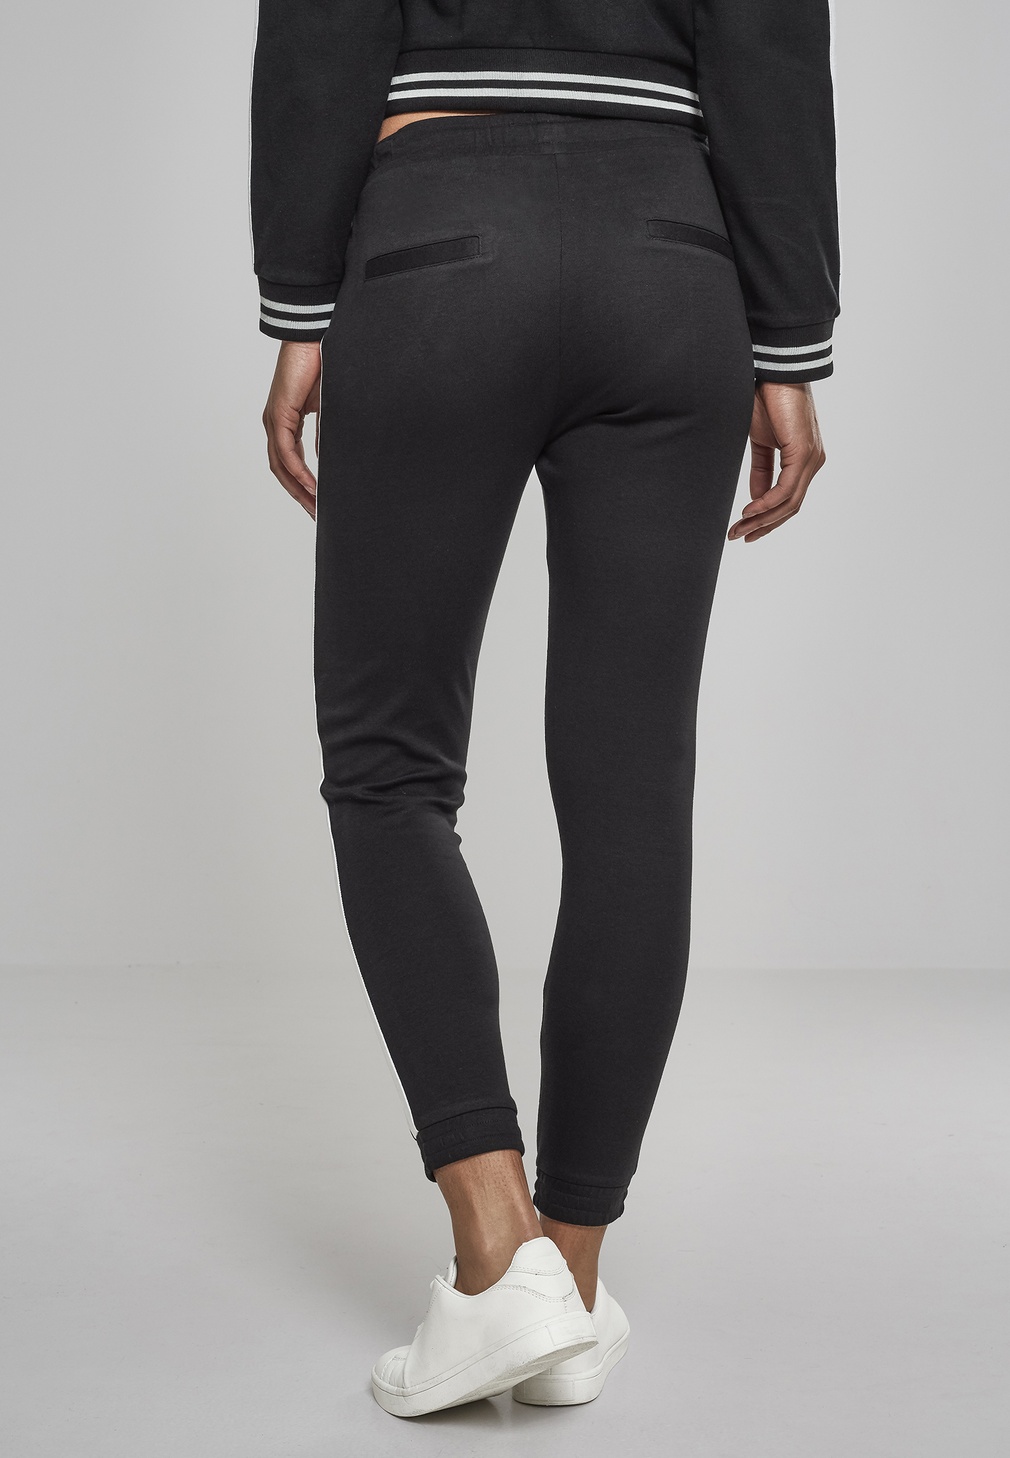 | Ladies Hosen Black/White Urban Lifestyle Damen Jogpants Interlock | Classics | Sweatpants Damen